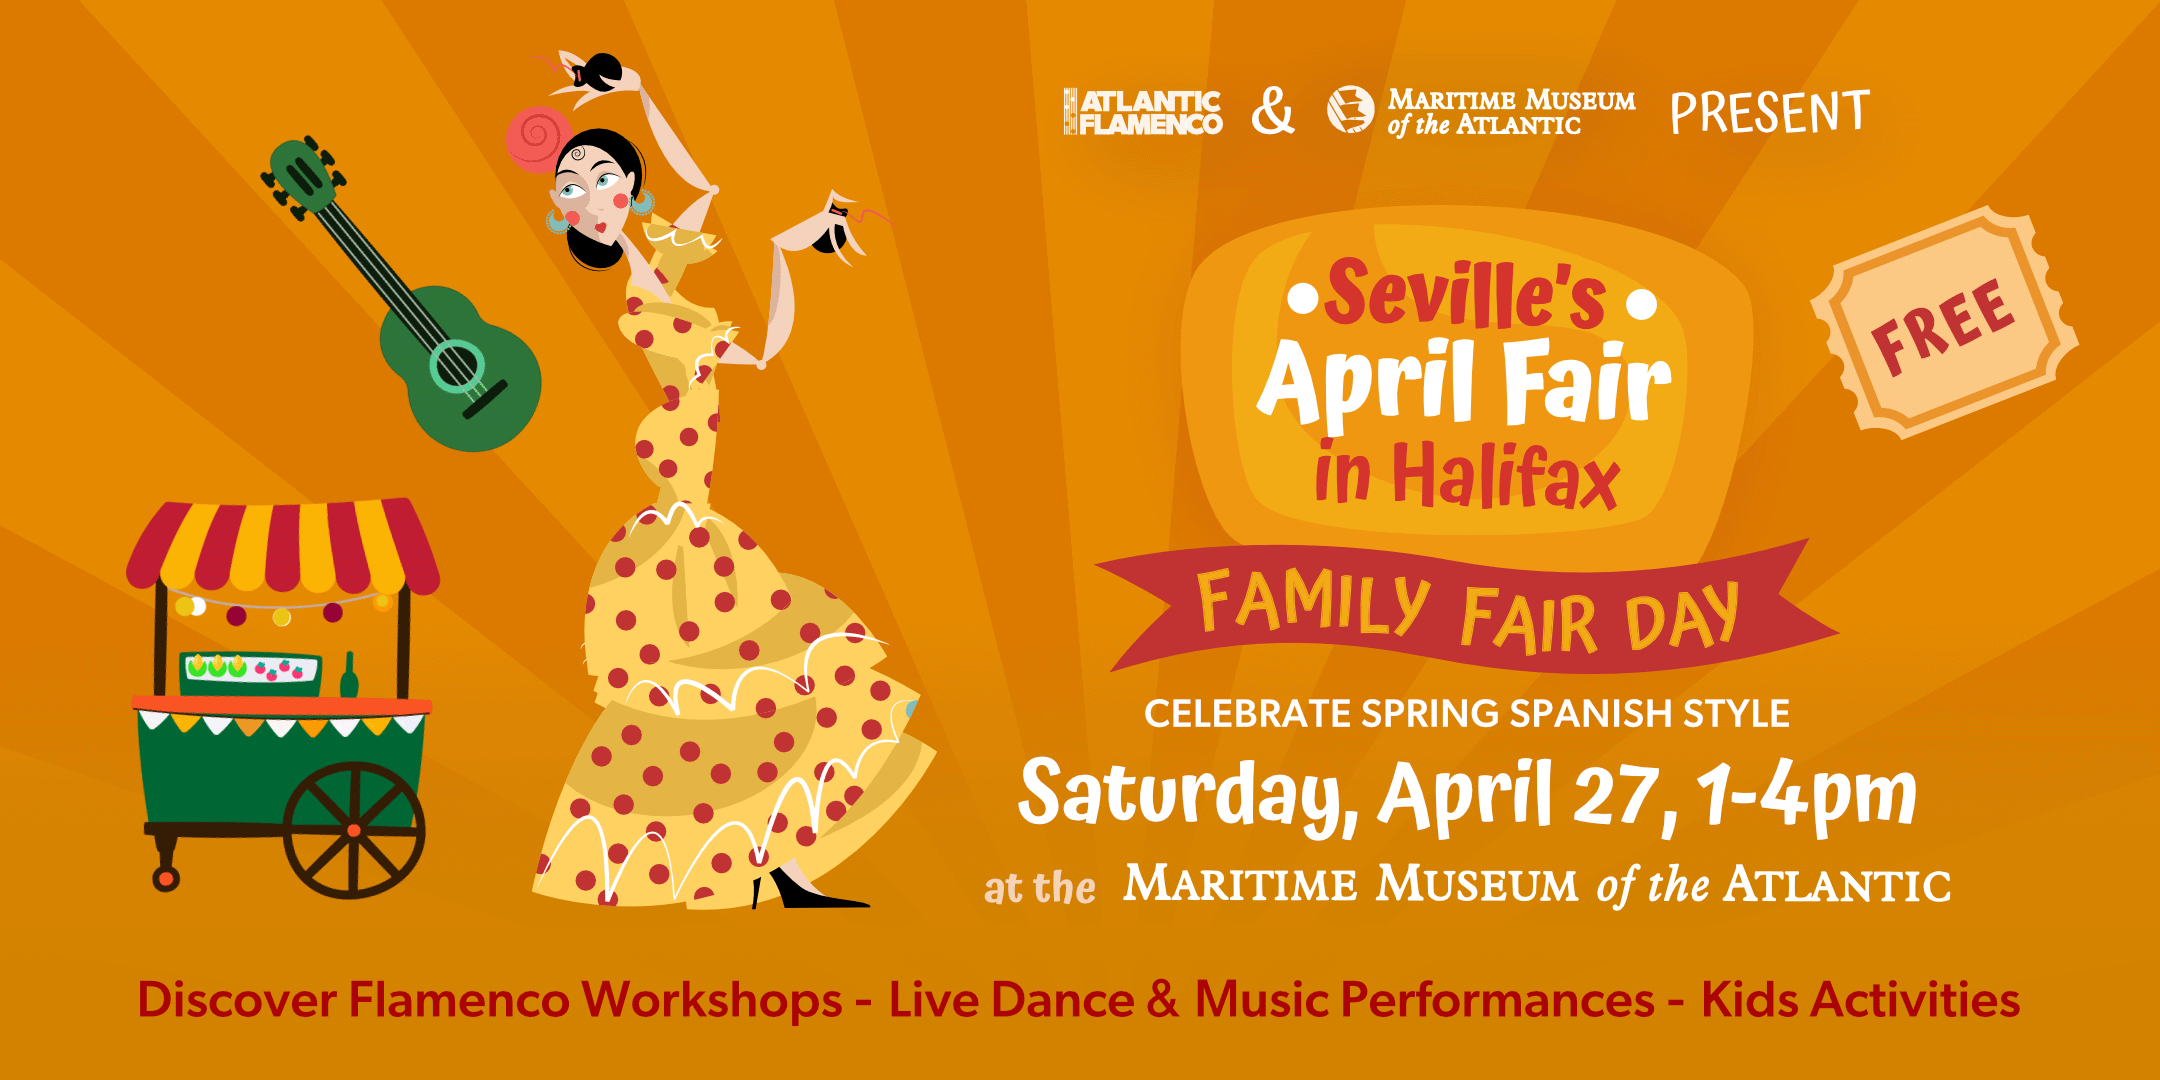 Seville's April Fair in Halifax